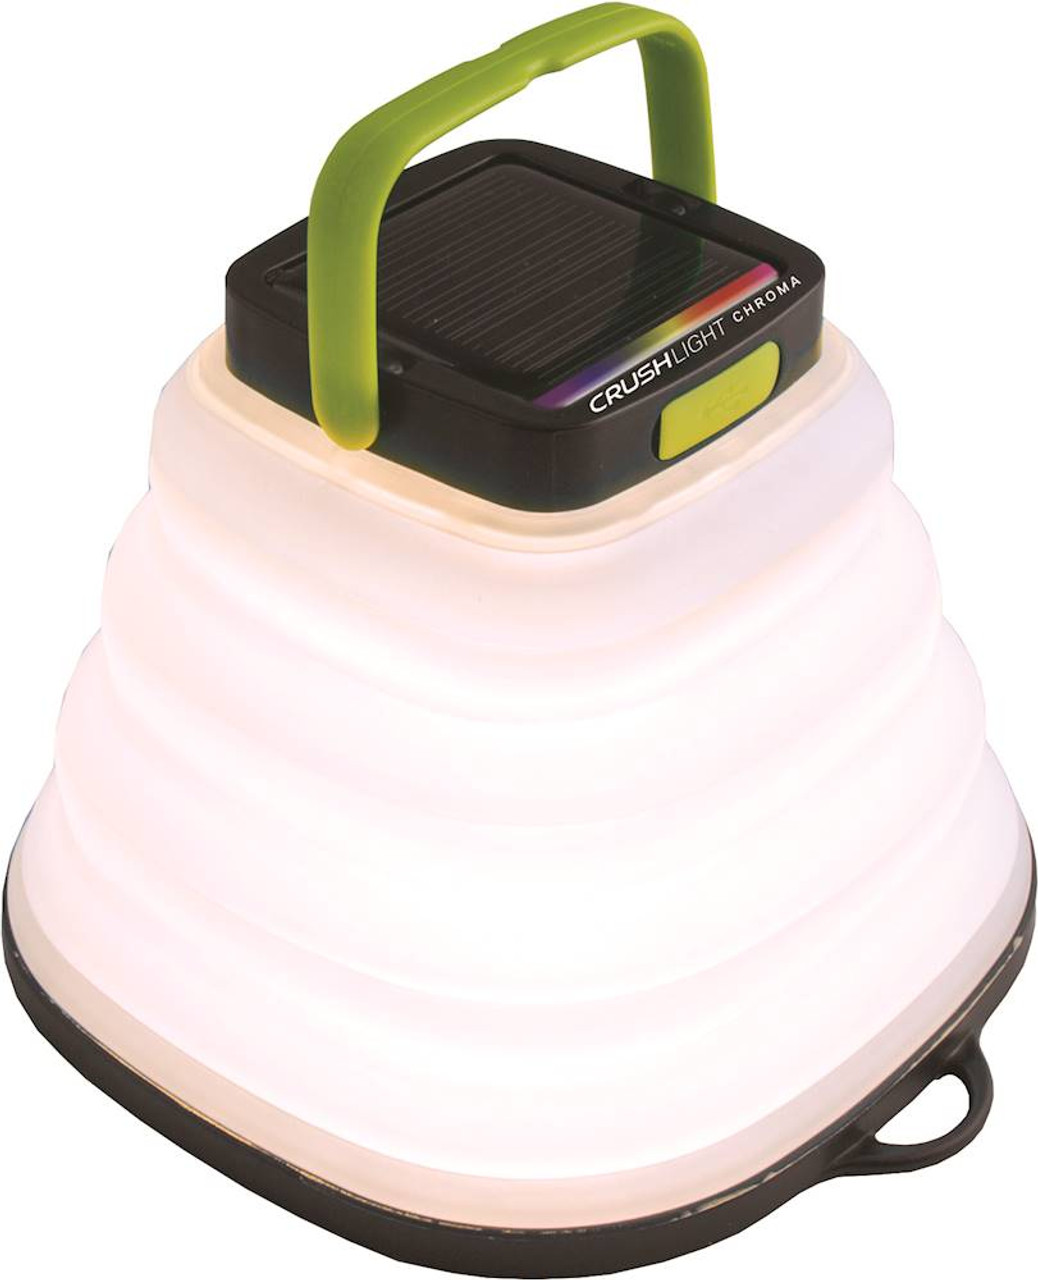 Goal Zero - Crush Light Chroma 60 Lumen LED Lantern - Black/White